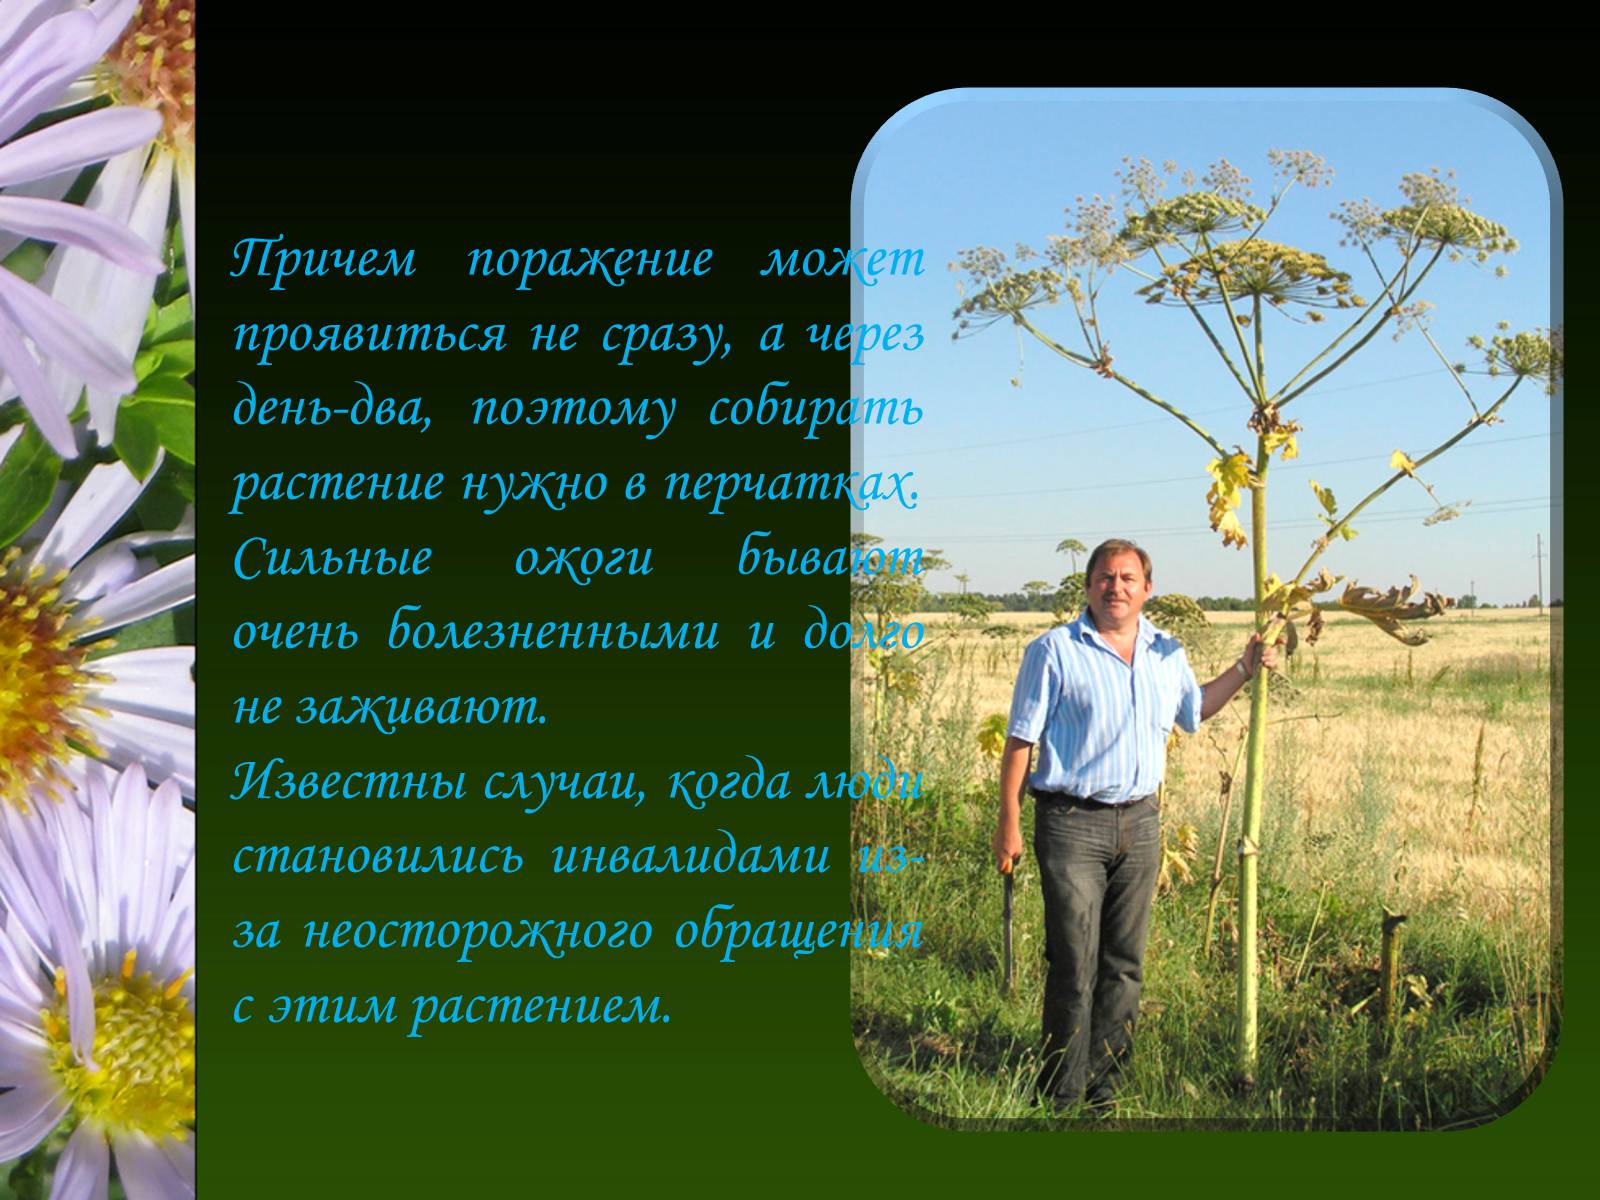 Презентація на тему «Ядовитые растения Украины» - Слайд #6